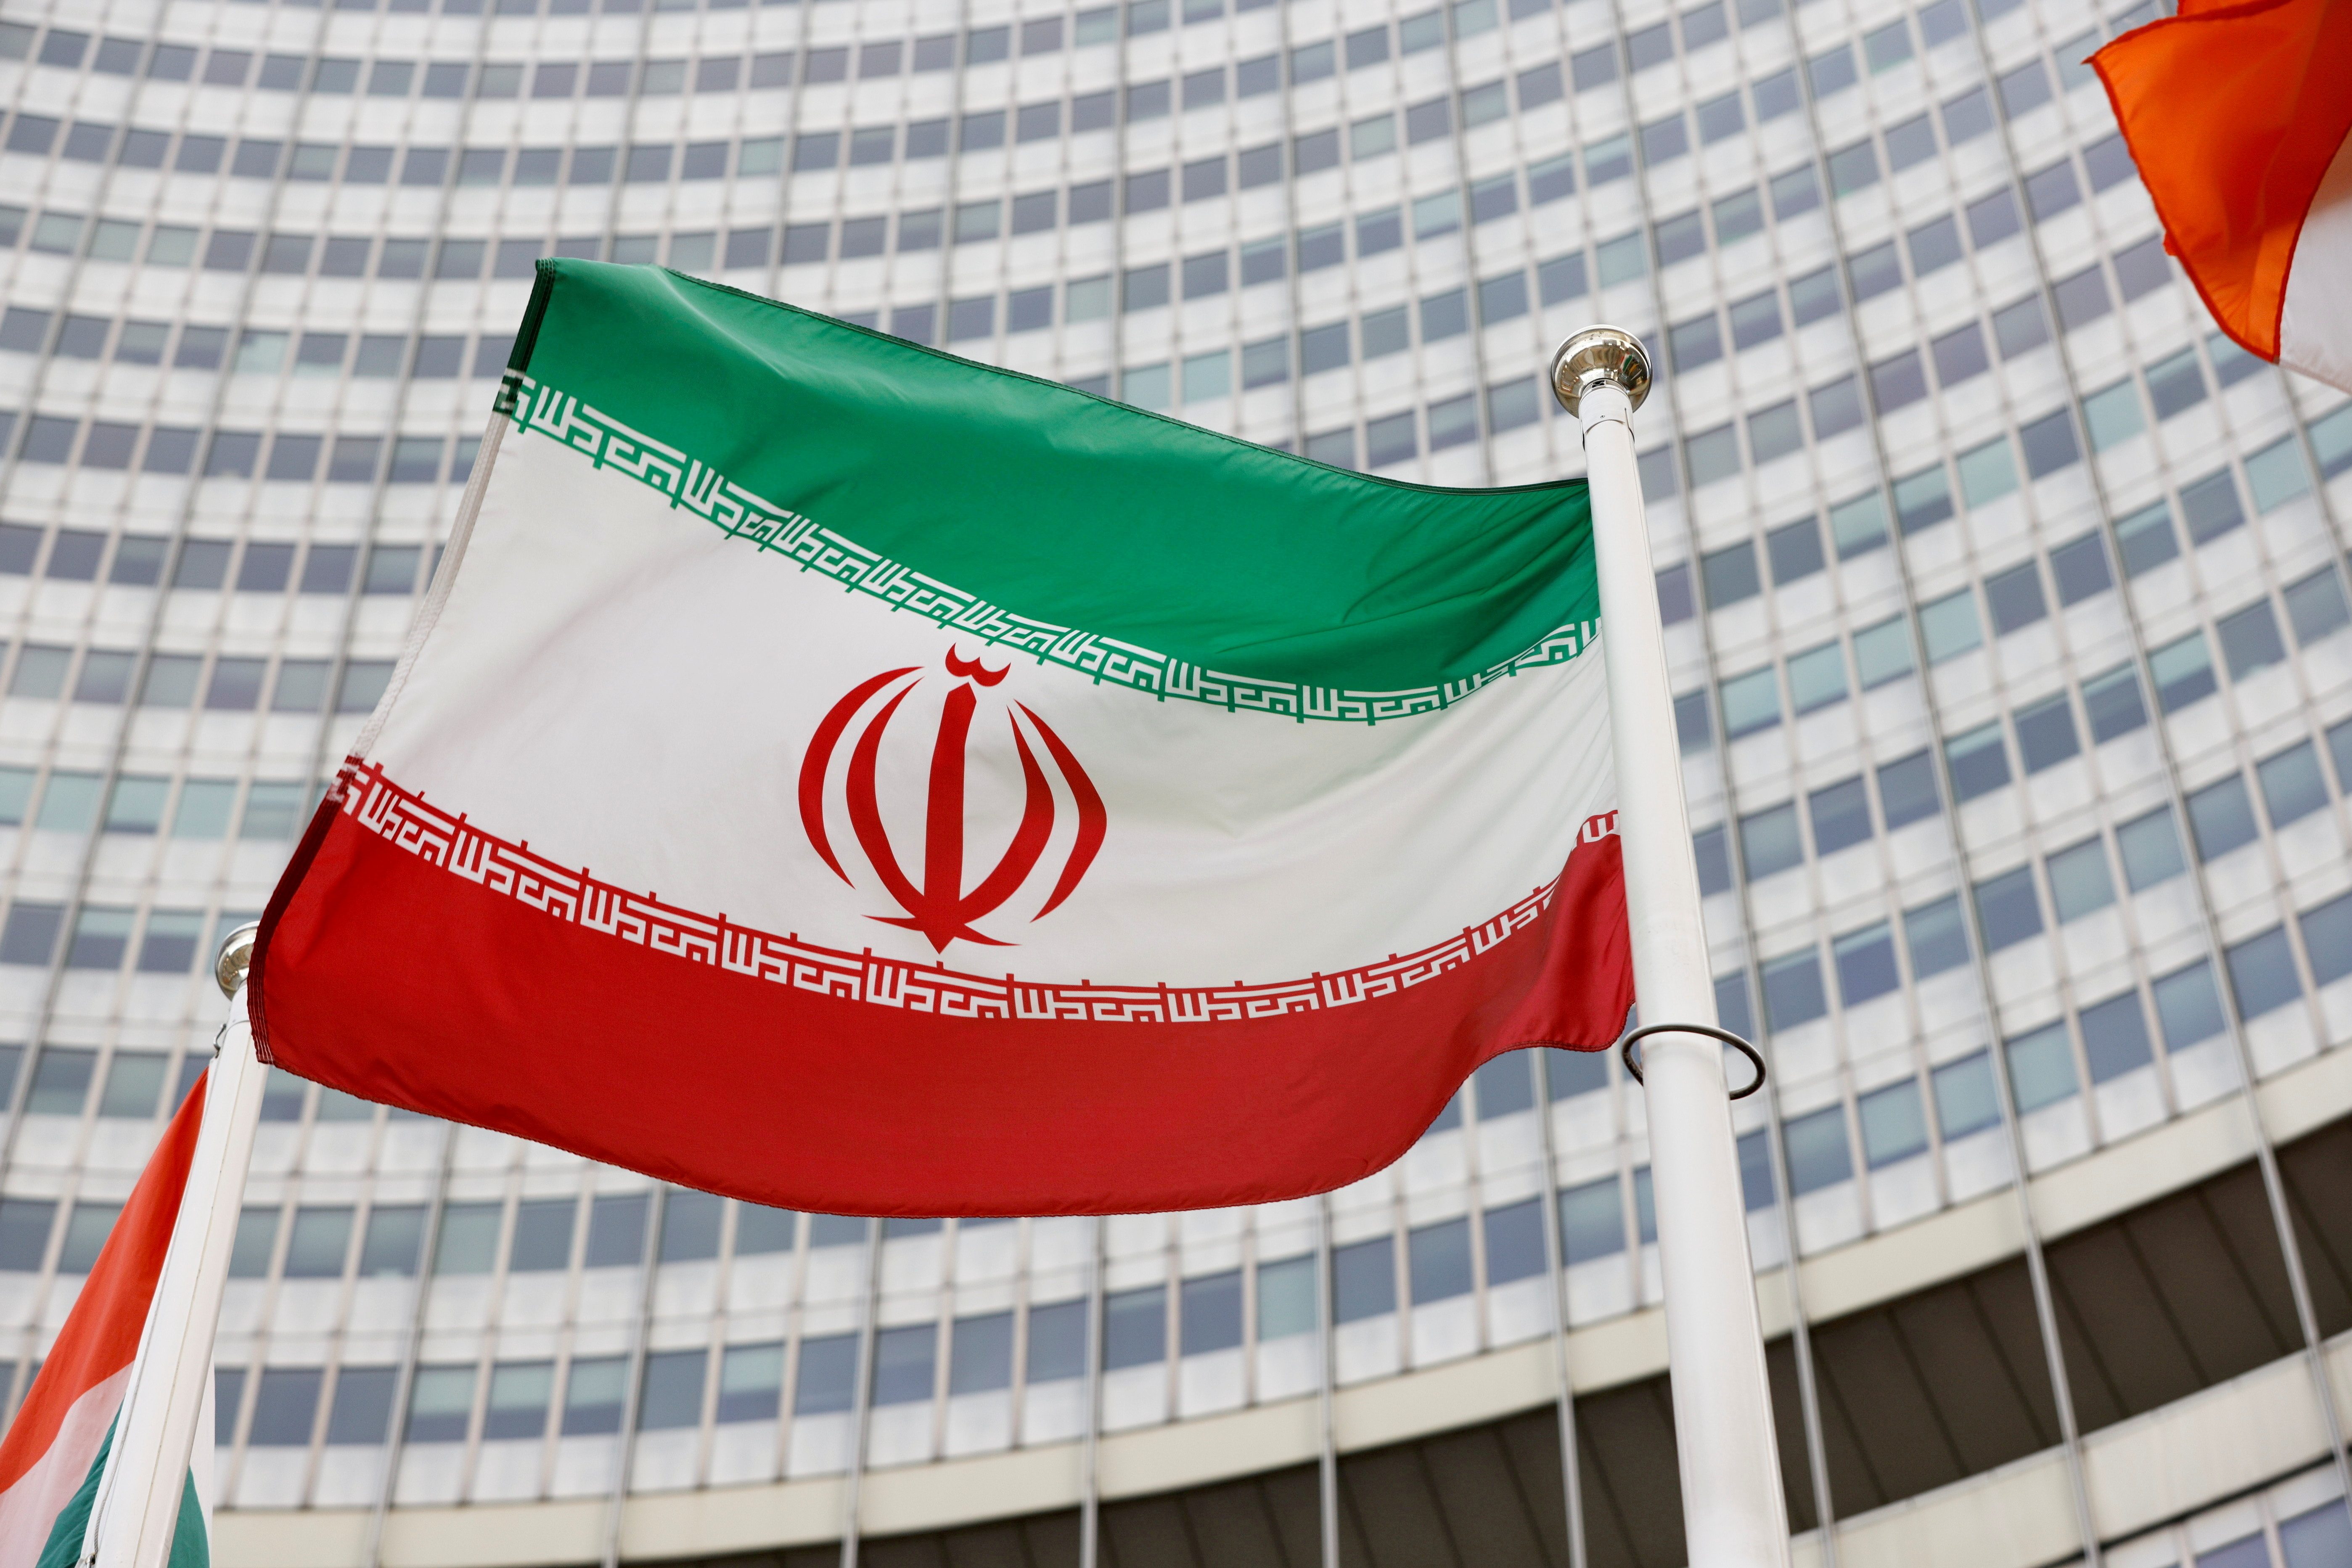 Iran says stockpile of 60% enriched uranium reaches 25 kg